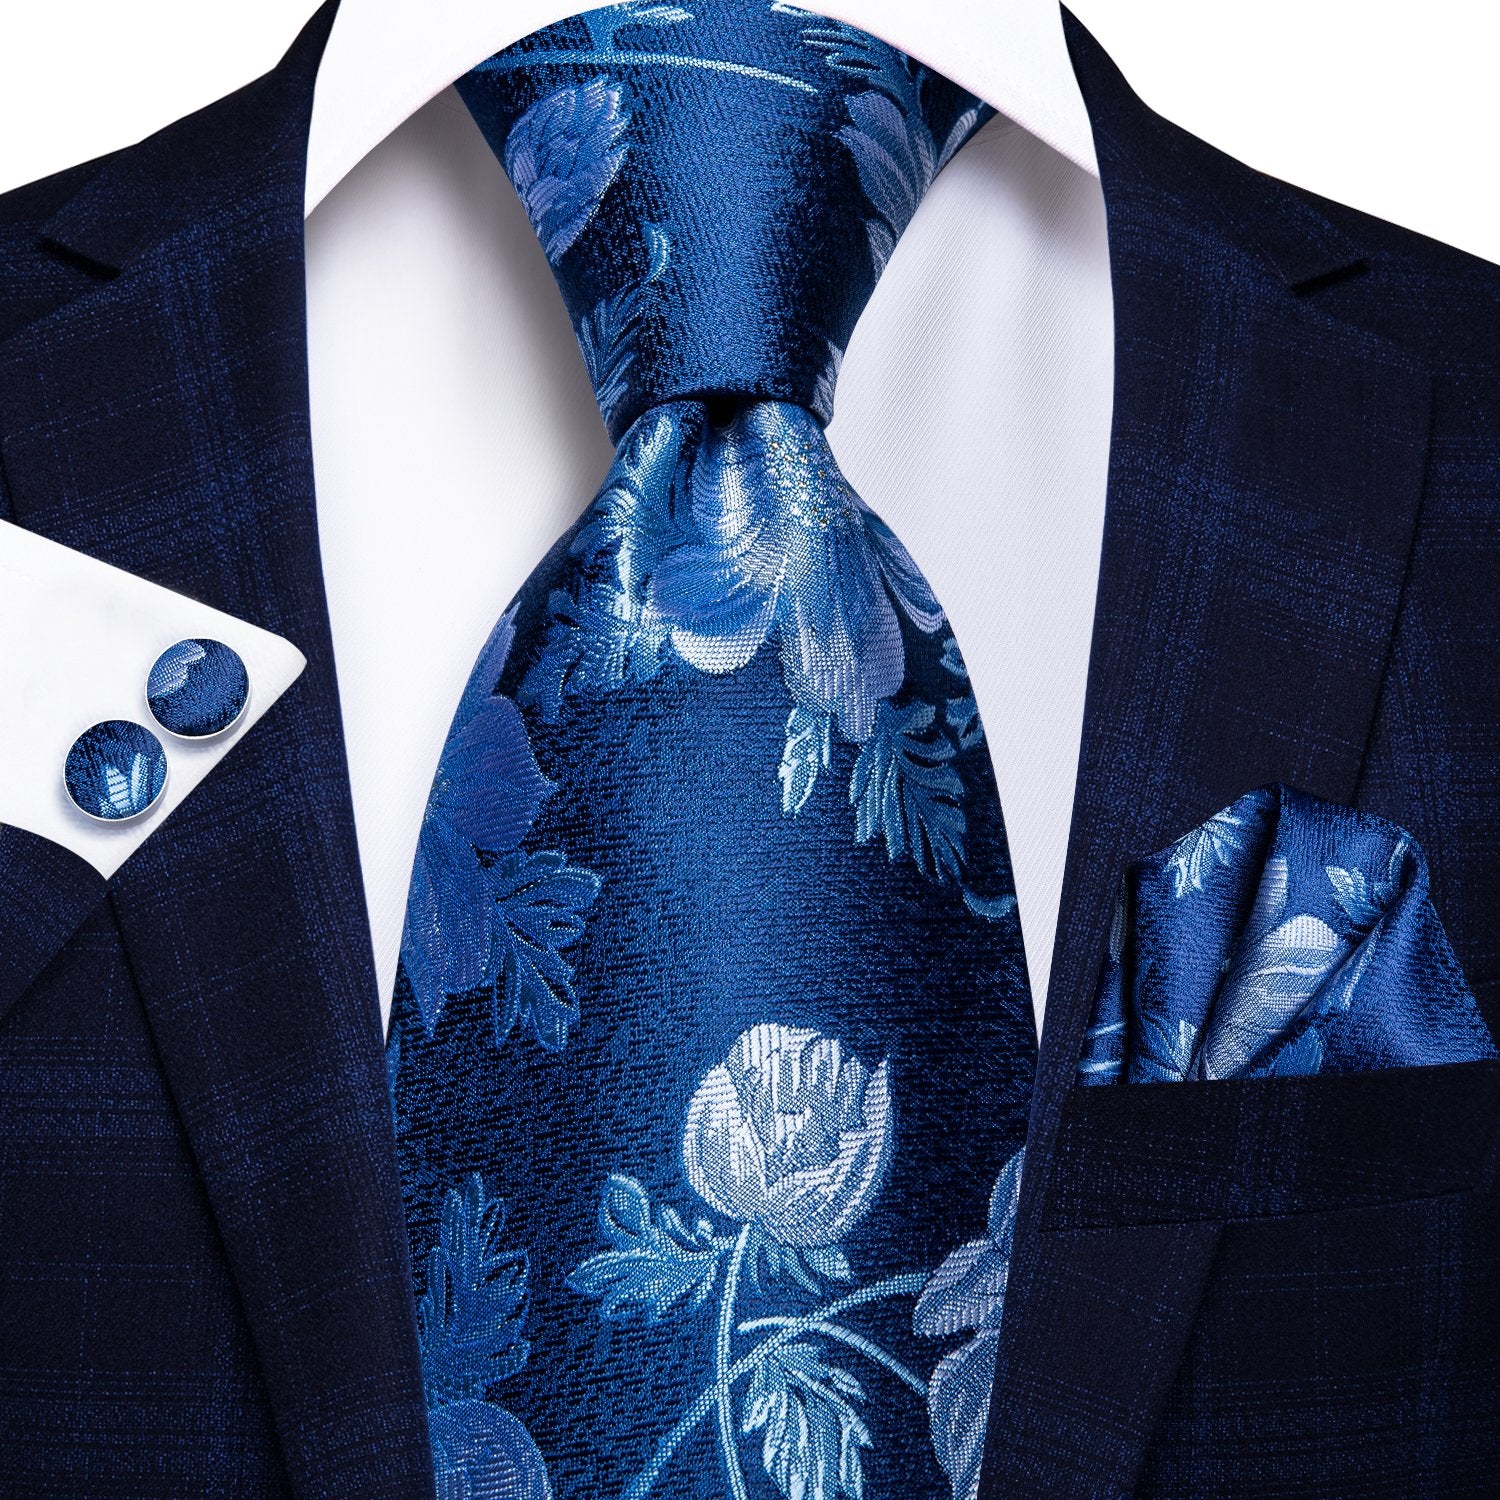 Blue Floral Tie Handkerchief Cufflinks Set with Wedding Brooch